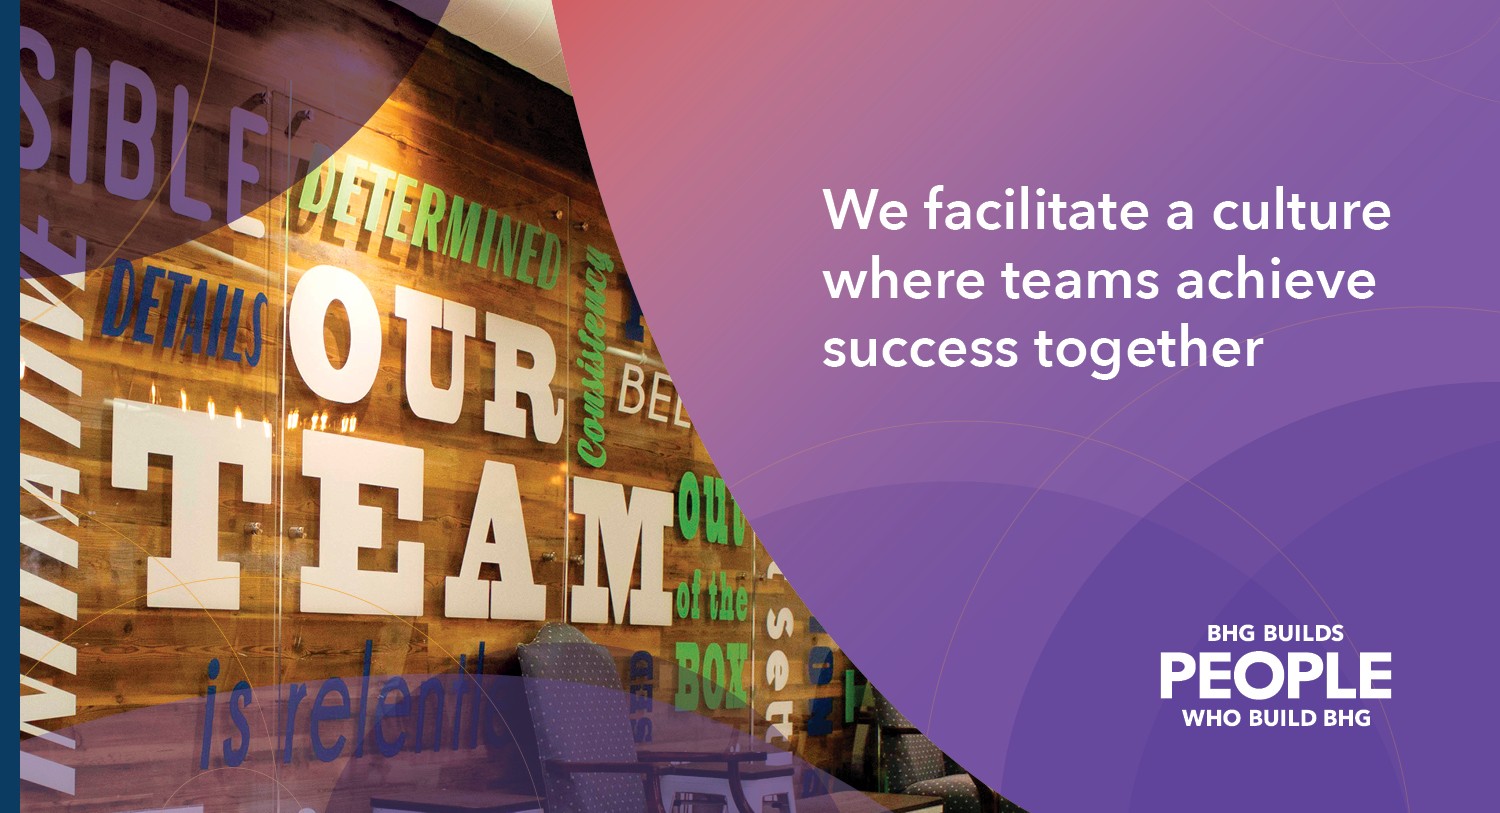 We facilitate a culture where teams achieve success together.